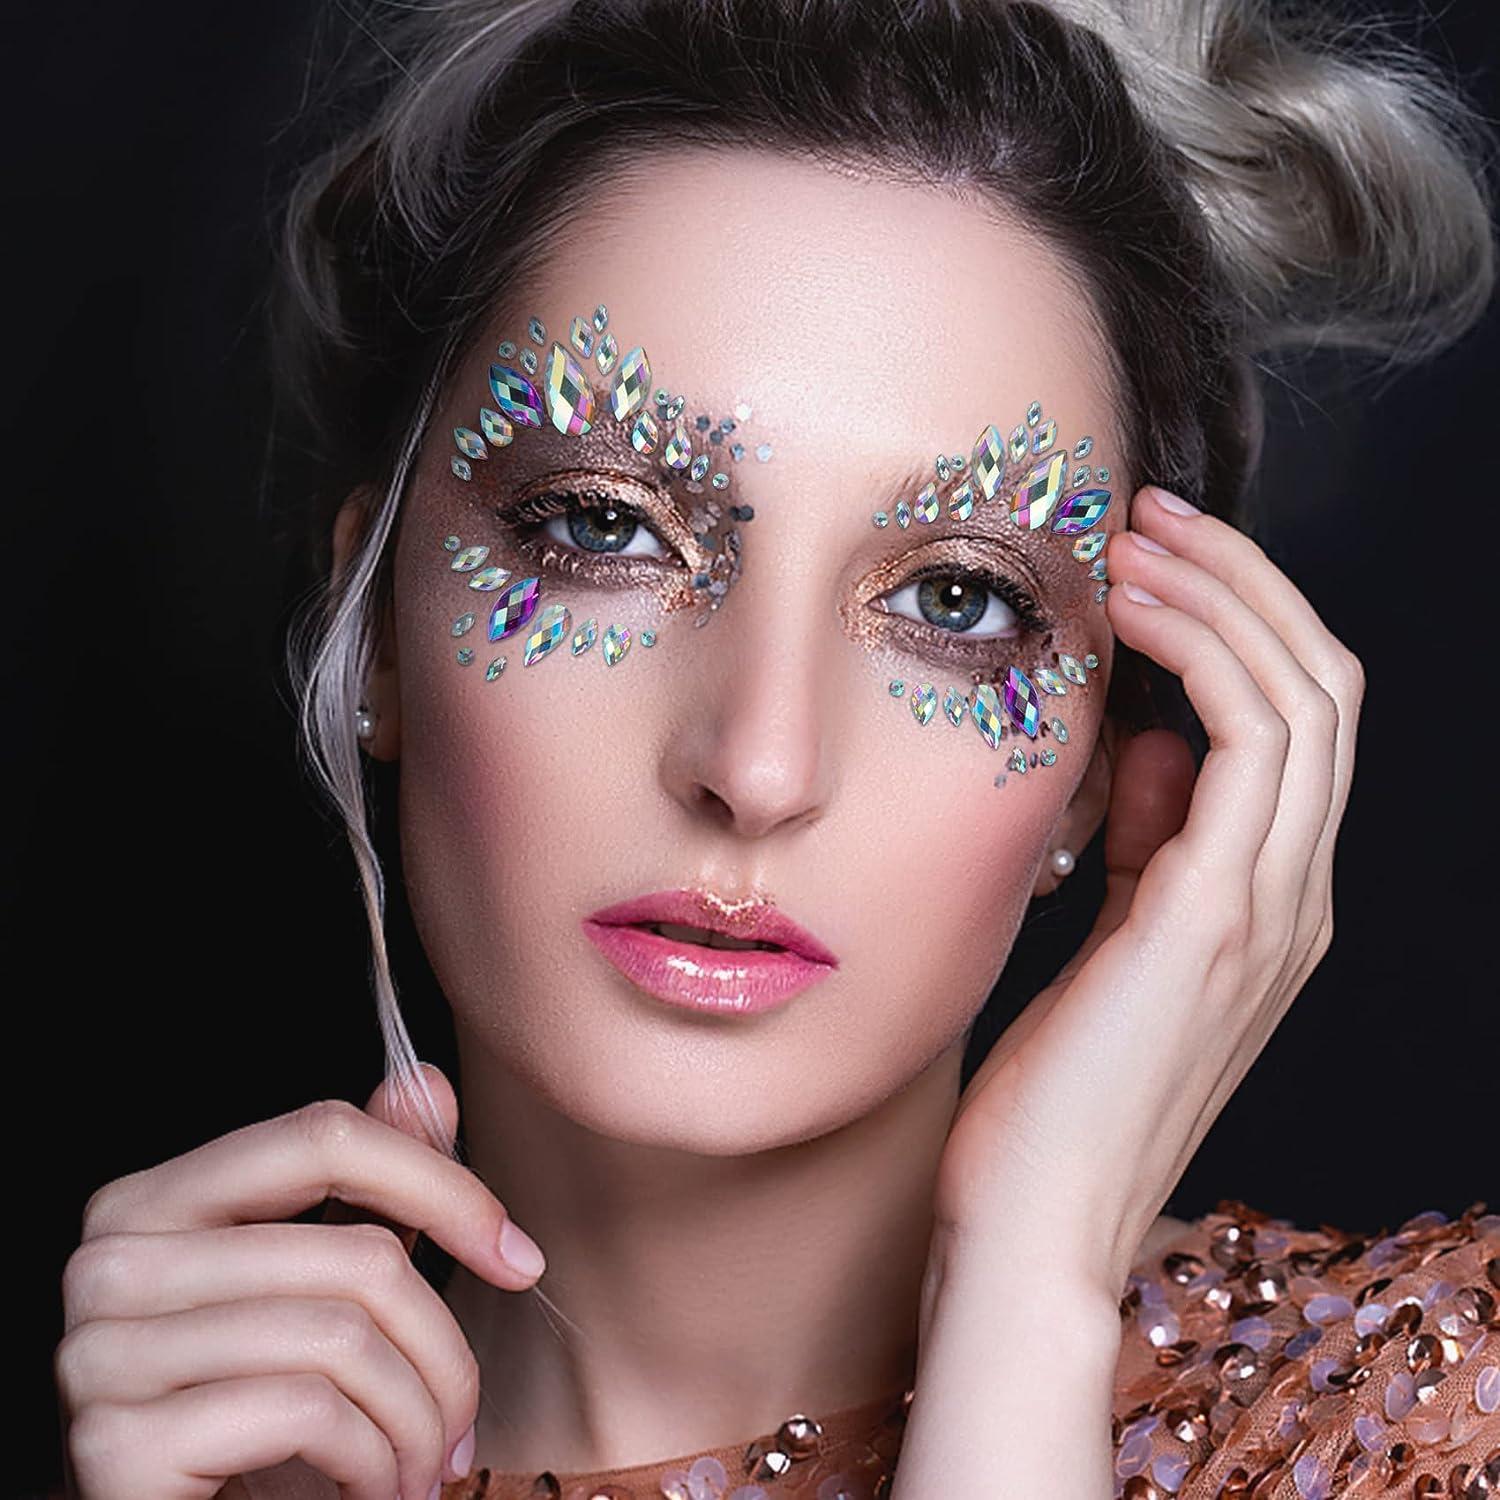 Face Gems, 10 Sets Mermaid Face Jewels Festival Face Gems Rhinestones Rave Eyes